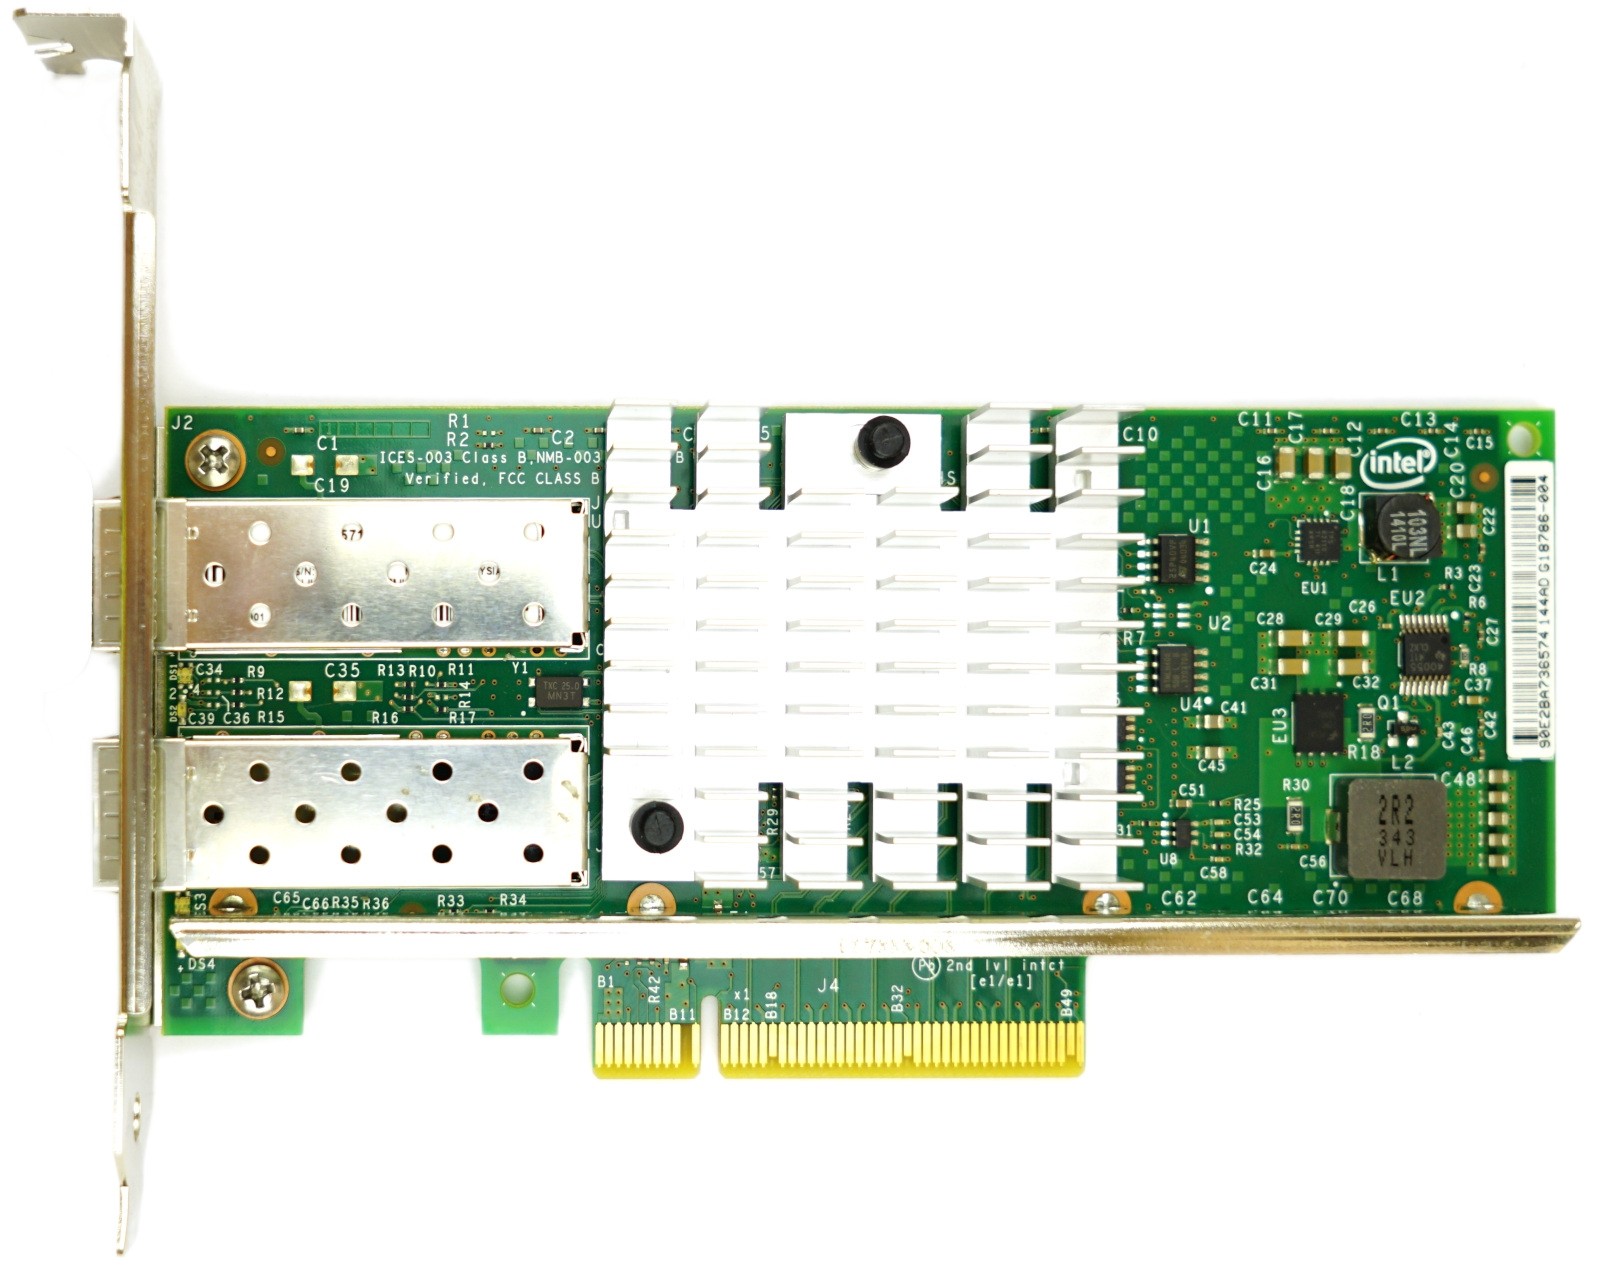 Dell X520-DA2 Dual Port - 10GbE SFP Full Height PCIe-x8 Ethernet